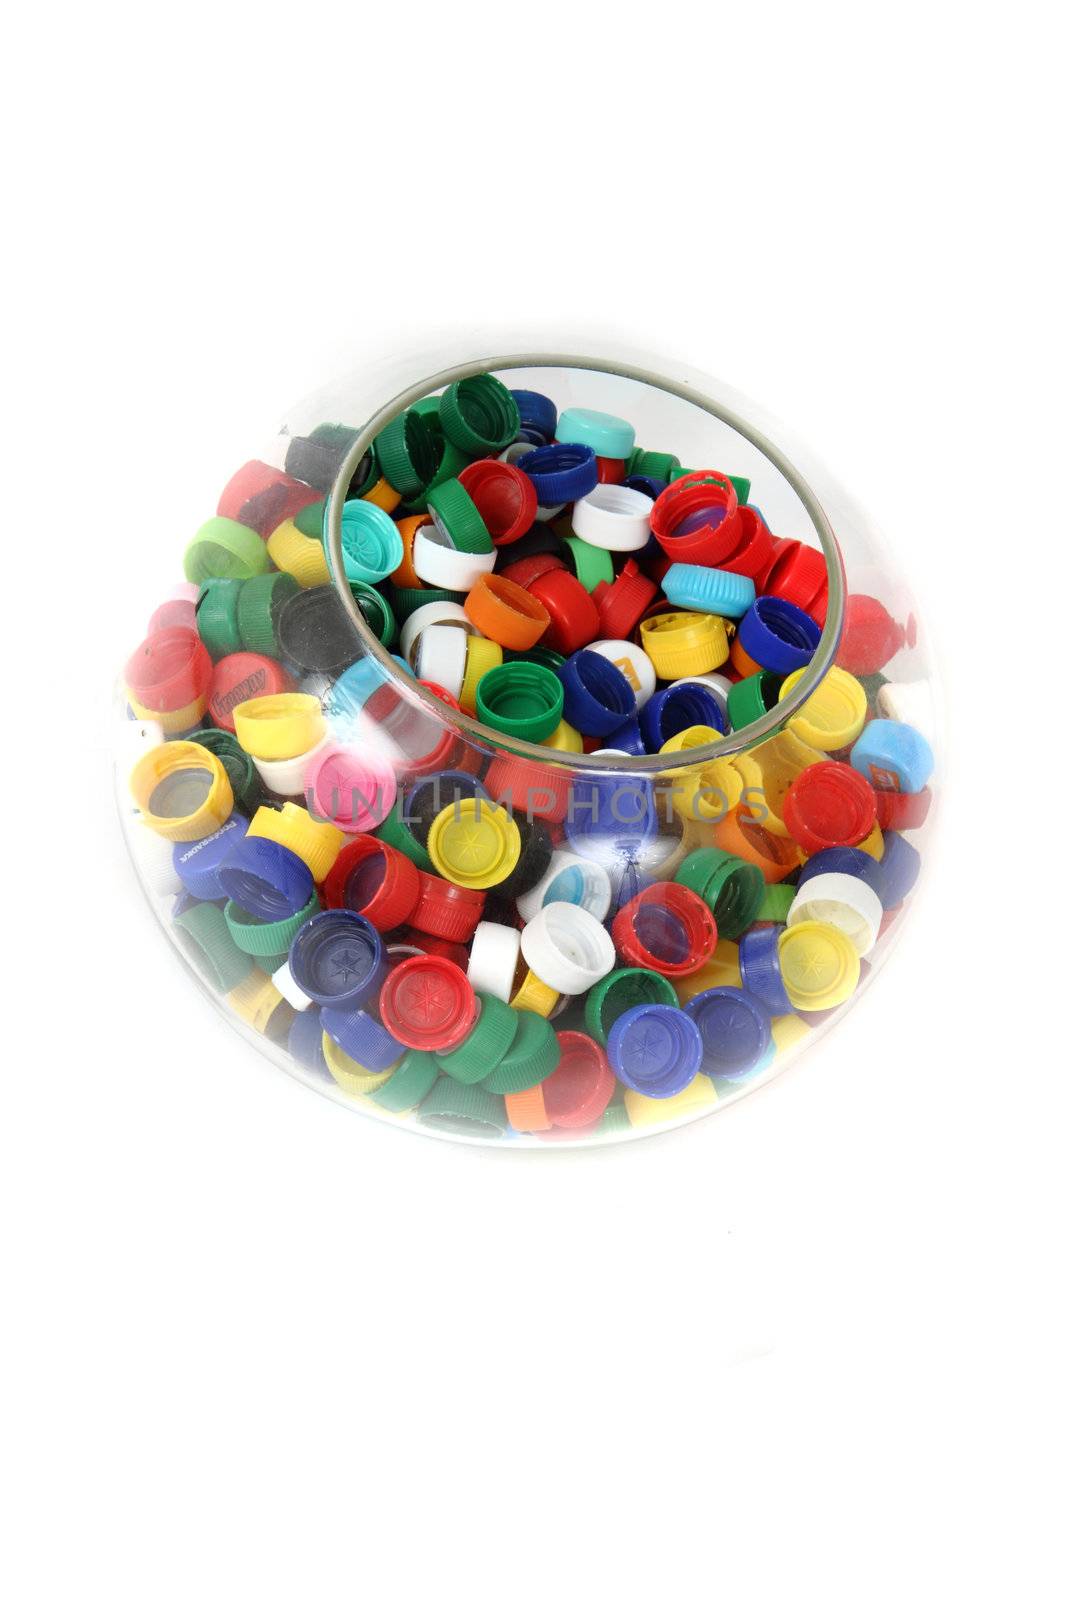 plastic caps in the glass sphere by jonnysek